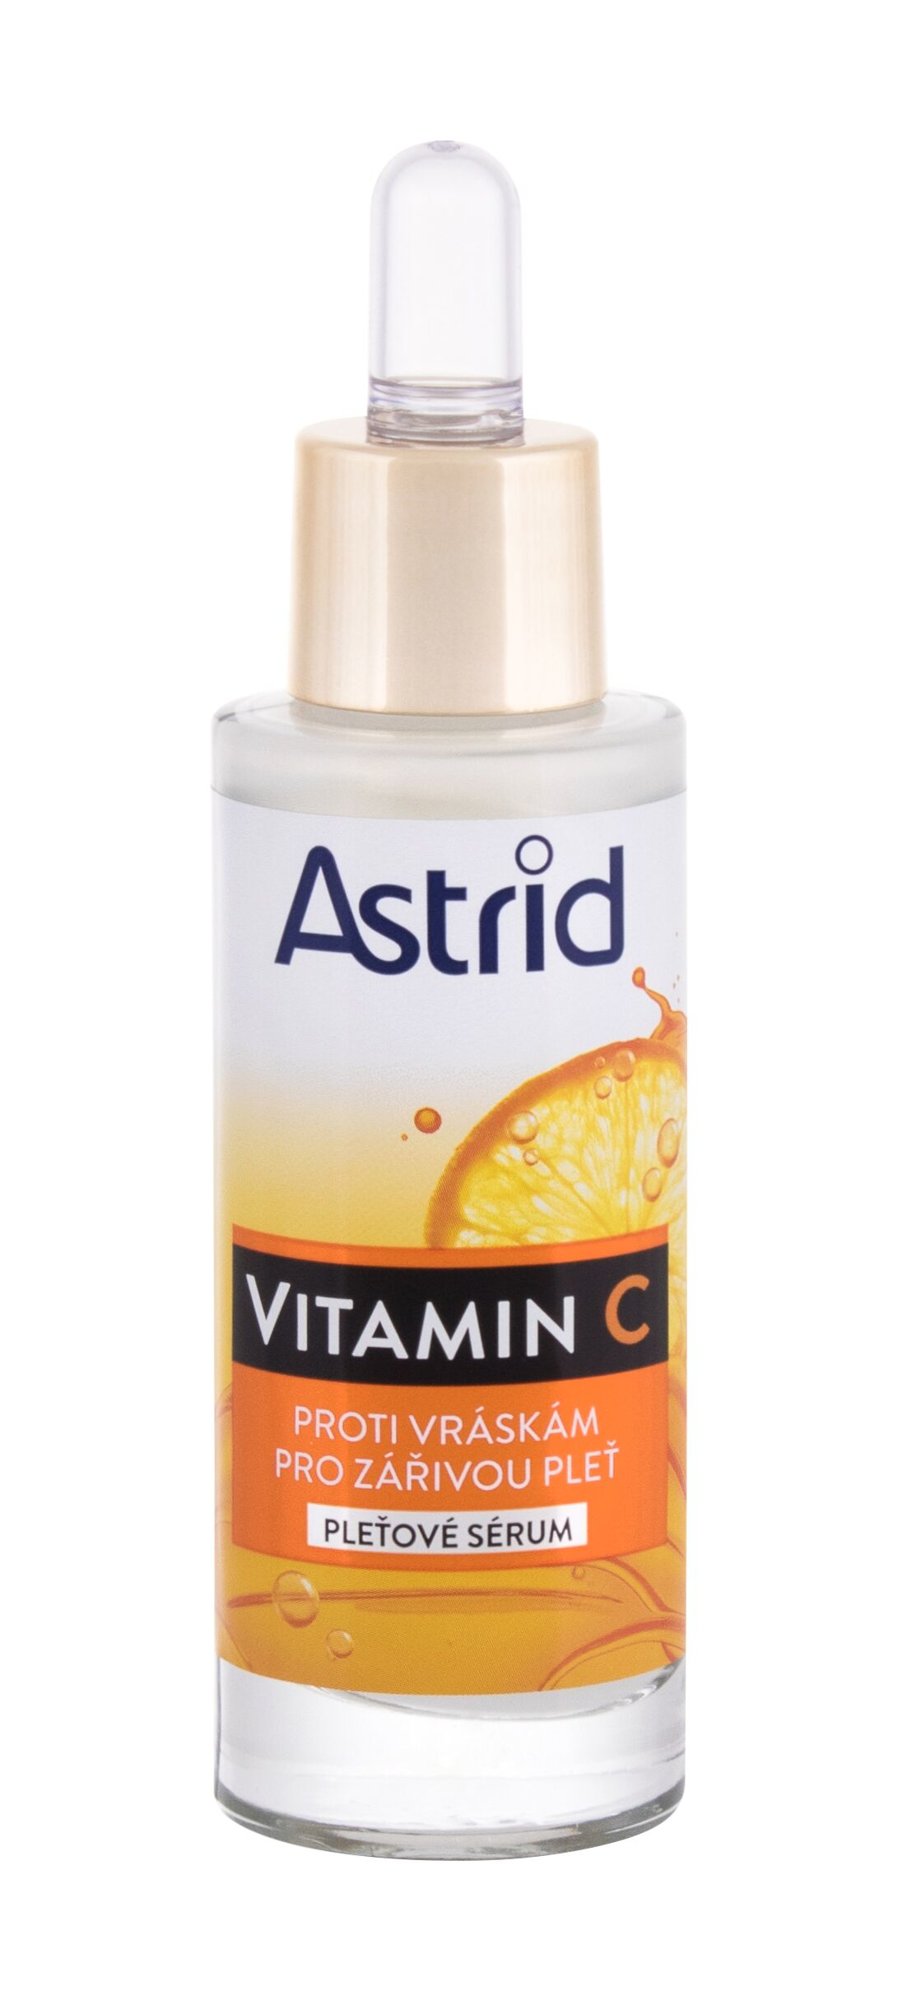 Astrid Vitamin C Veido serumas